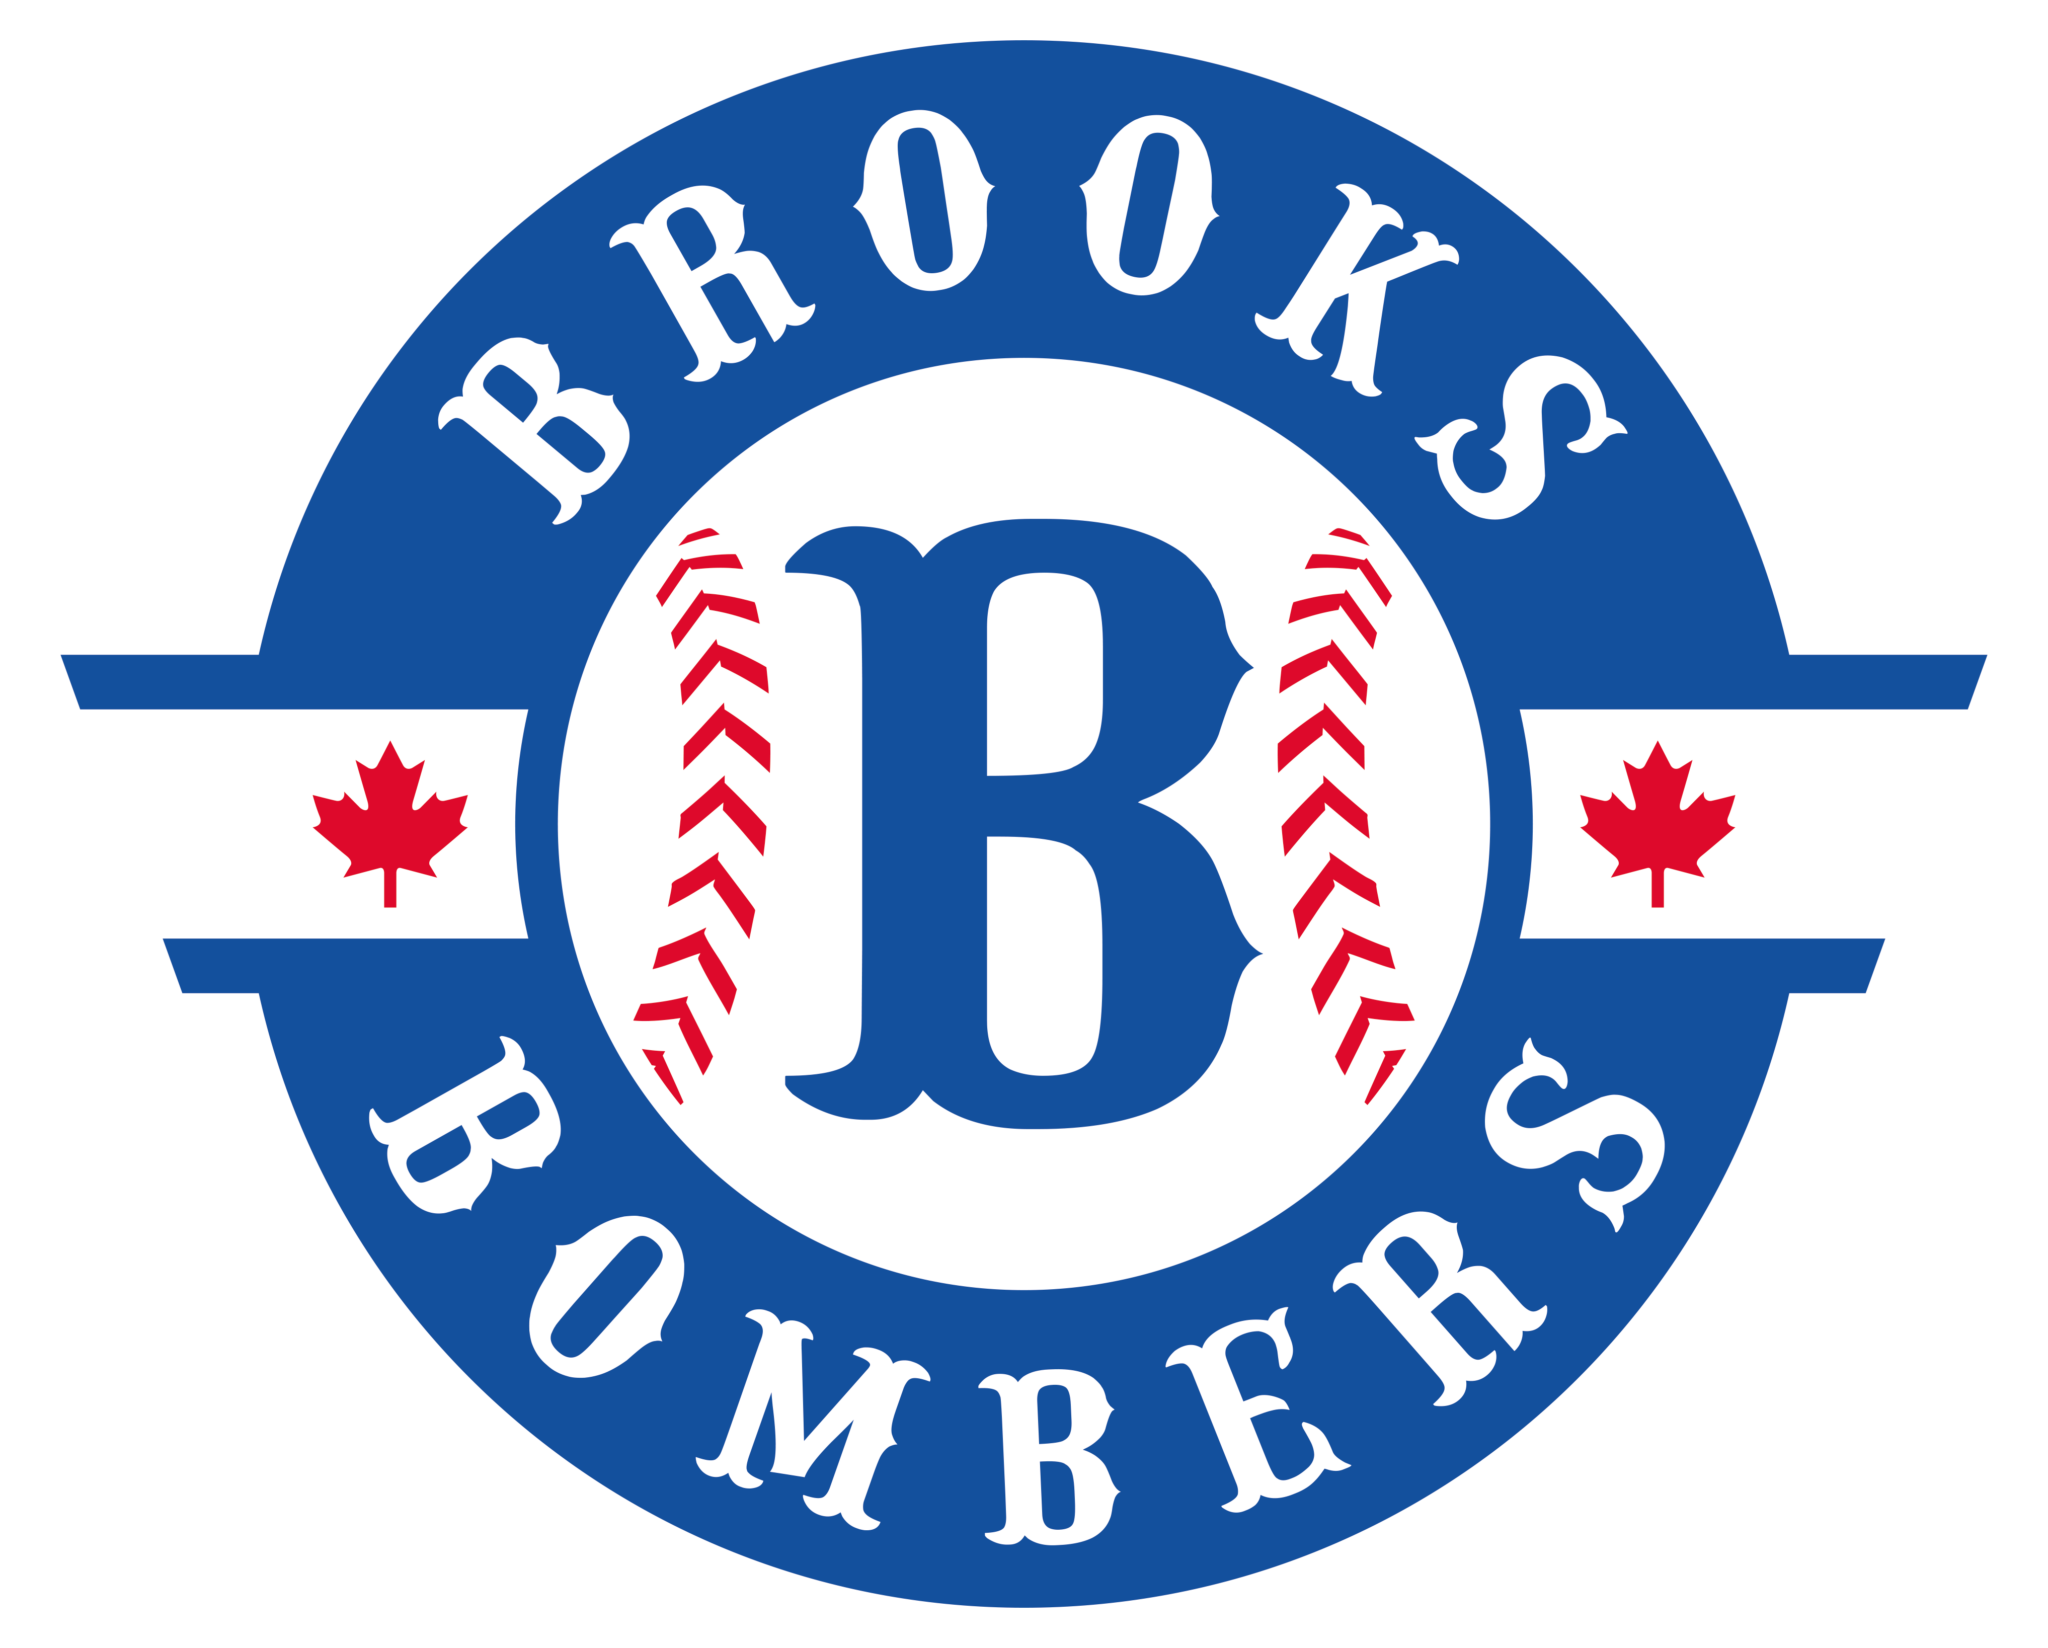 Brooks Bombers Ticket Portal